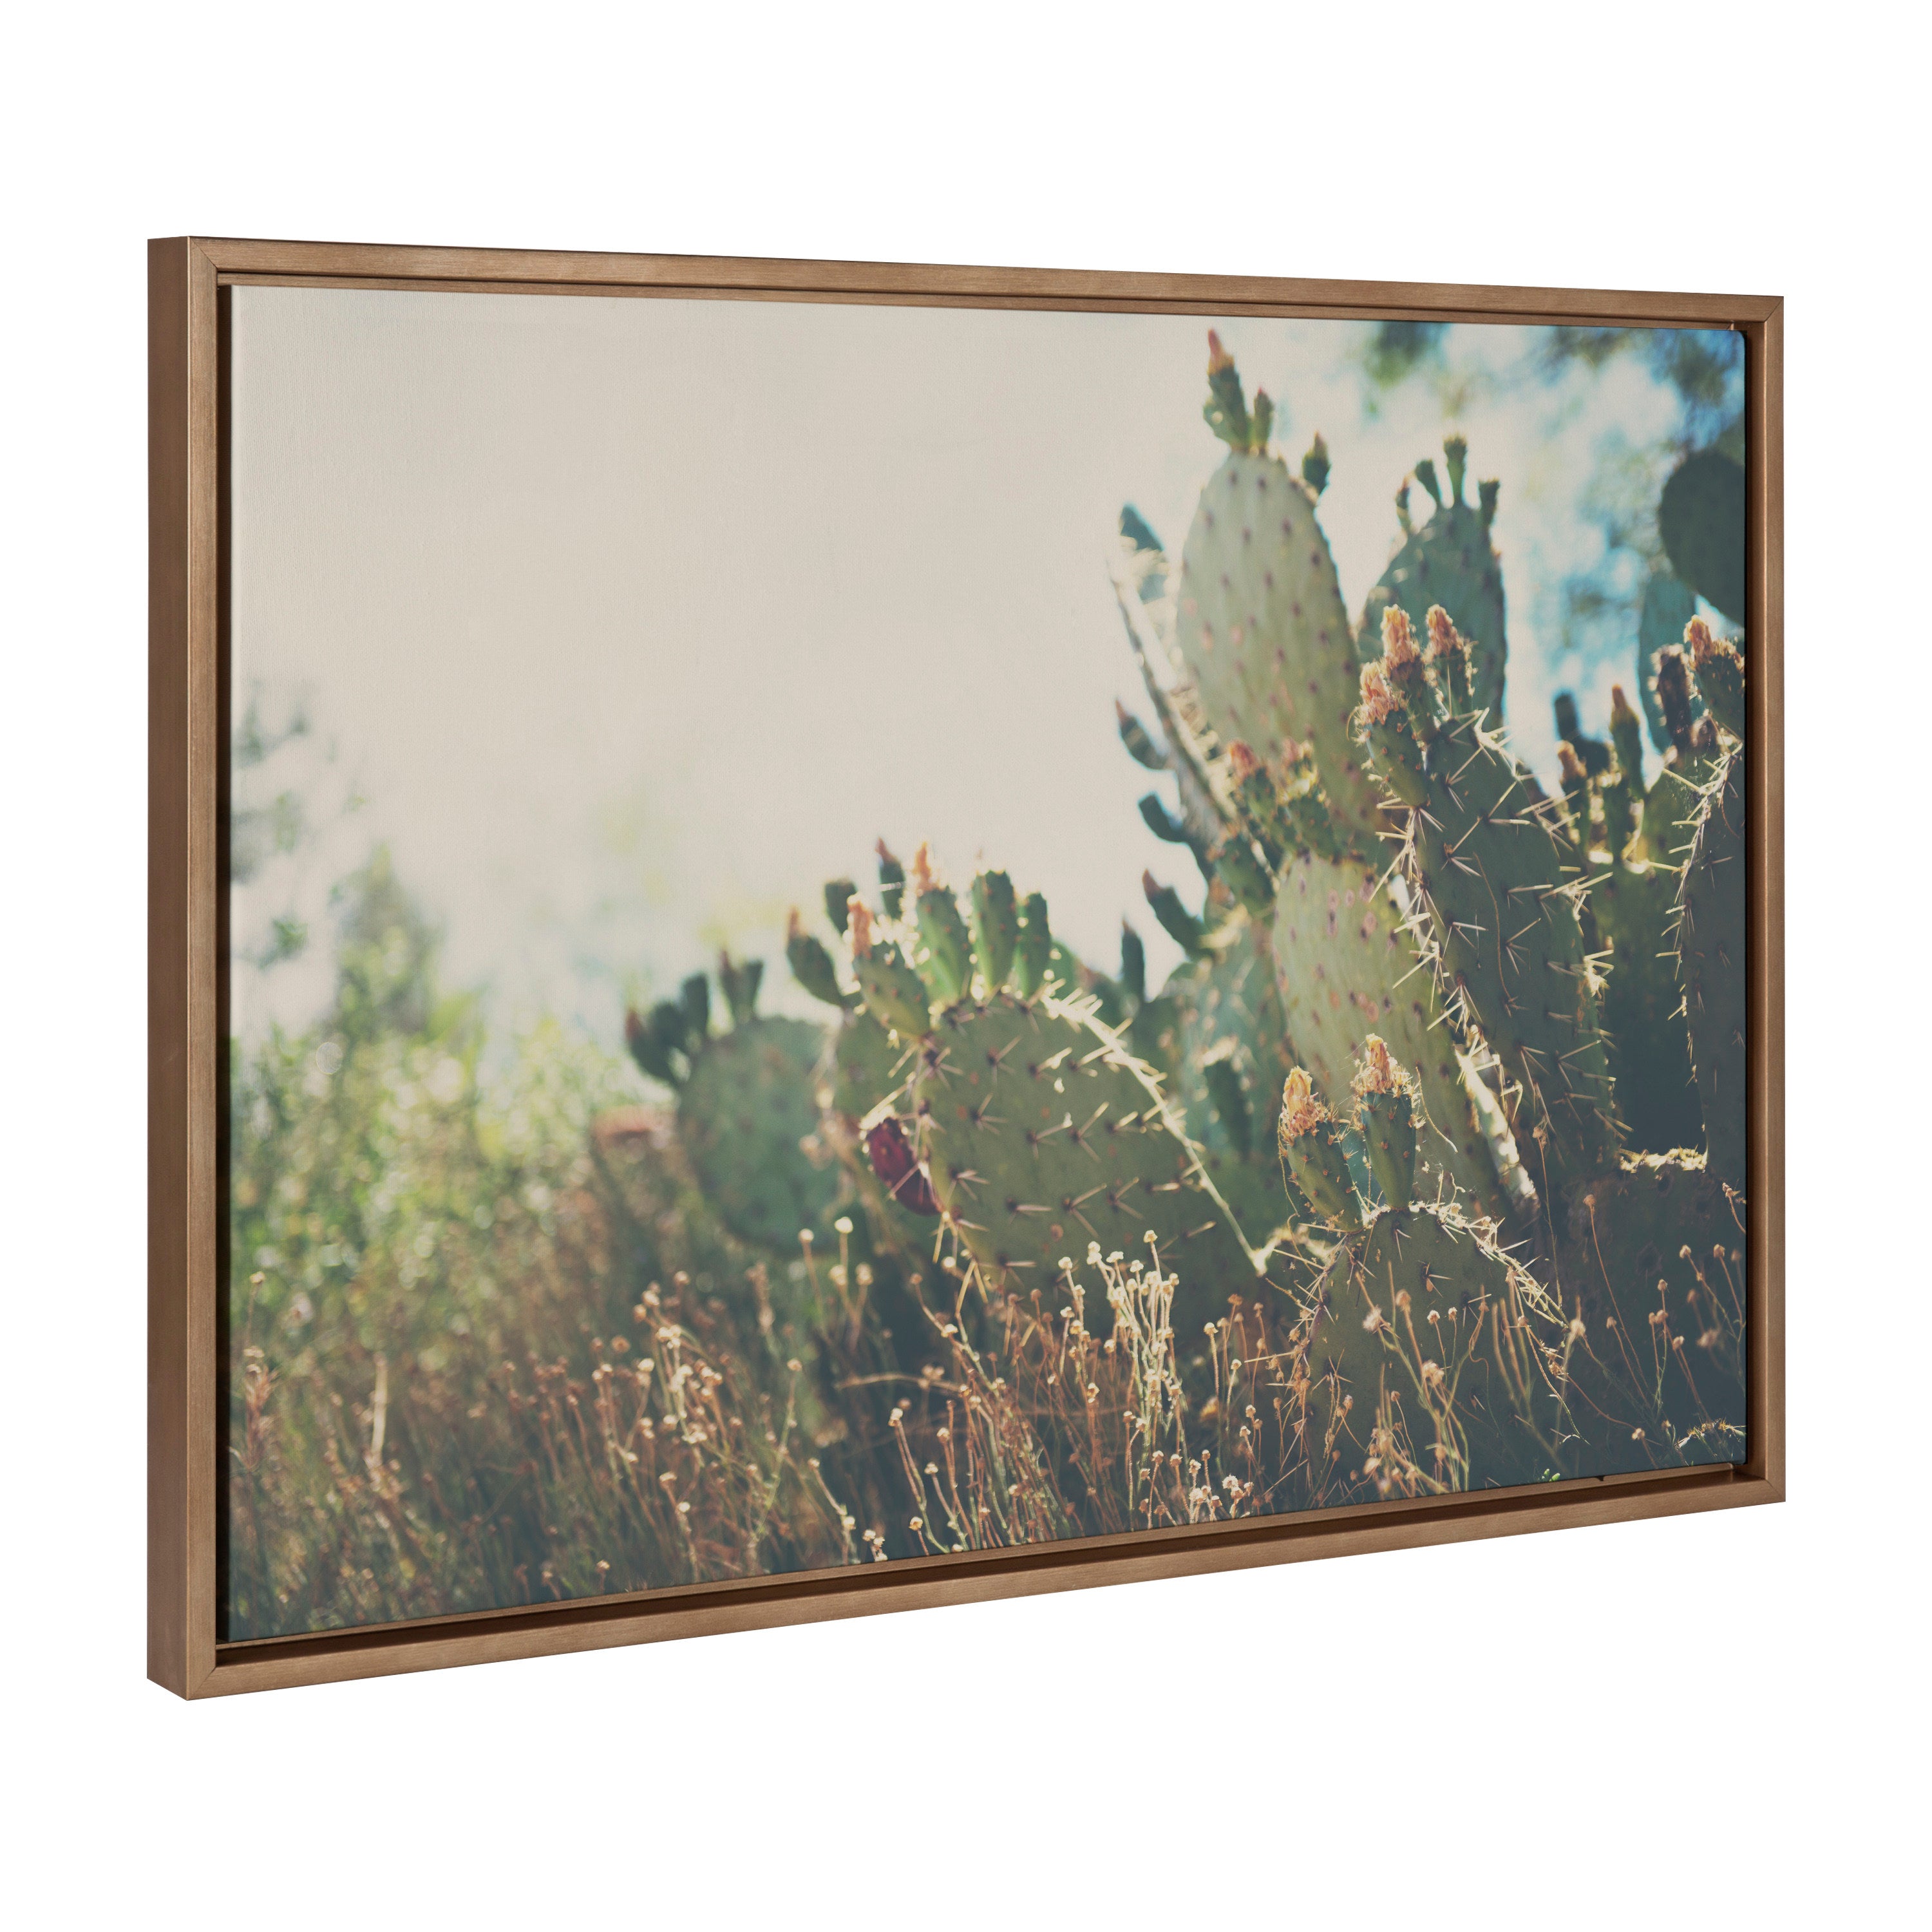 Sylvie A Desert Prickly Pear Cactus Framed Canvas by Laura Evans